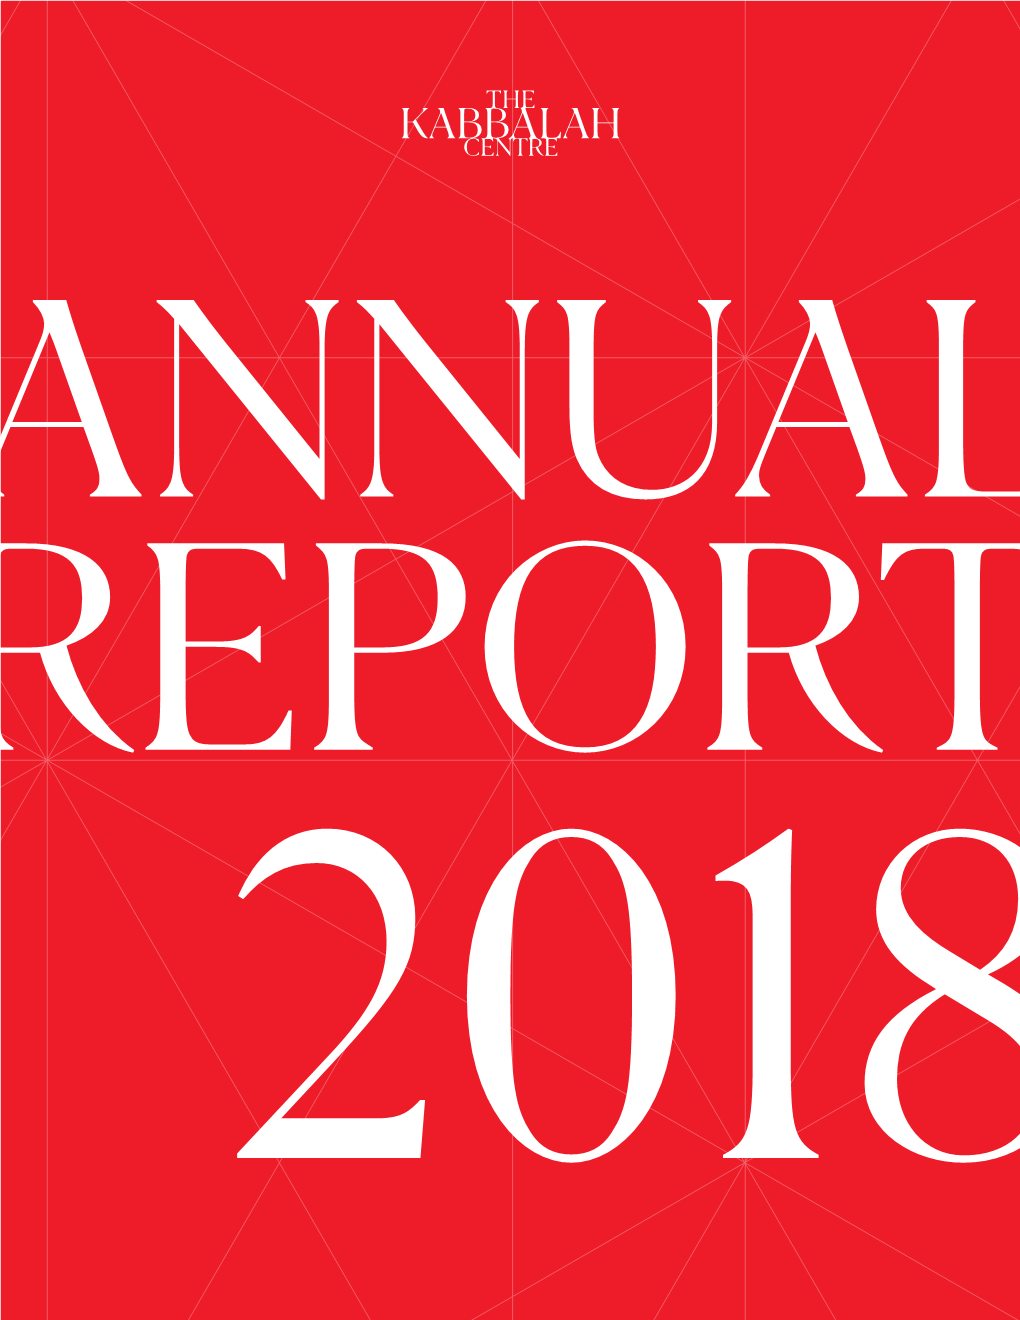 2018 the Kabbalah Centre Annual Report 2018